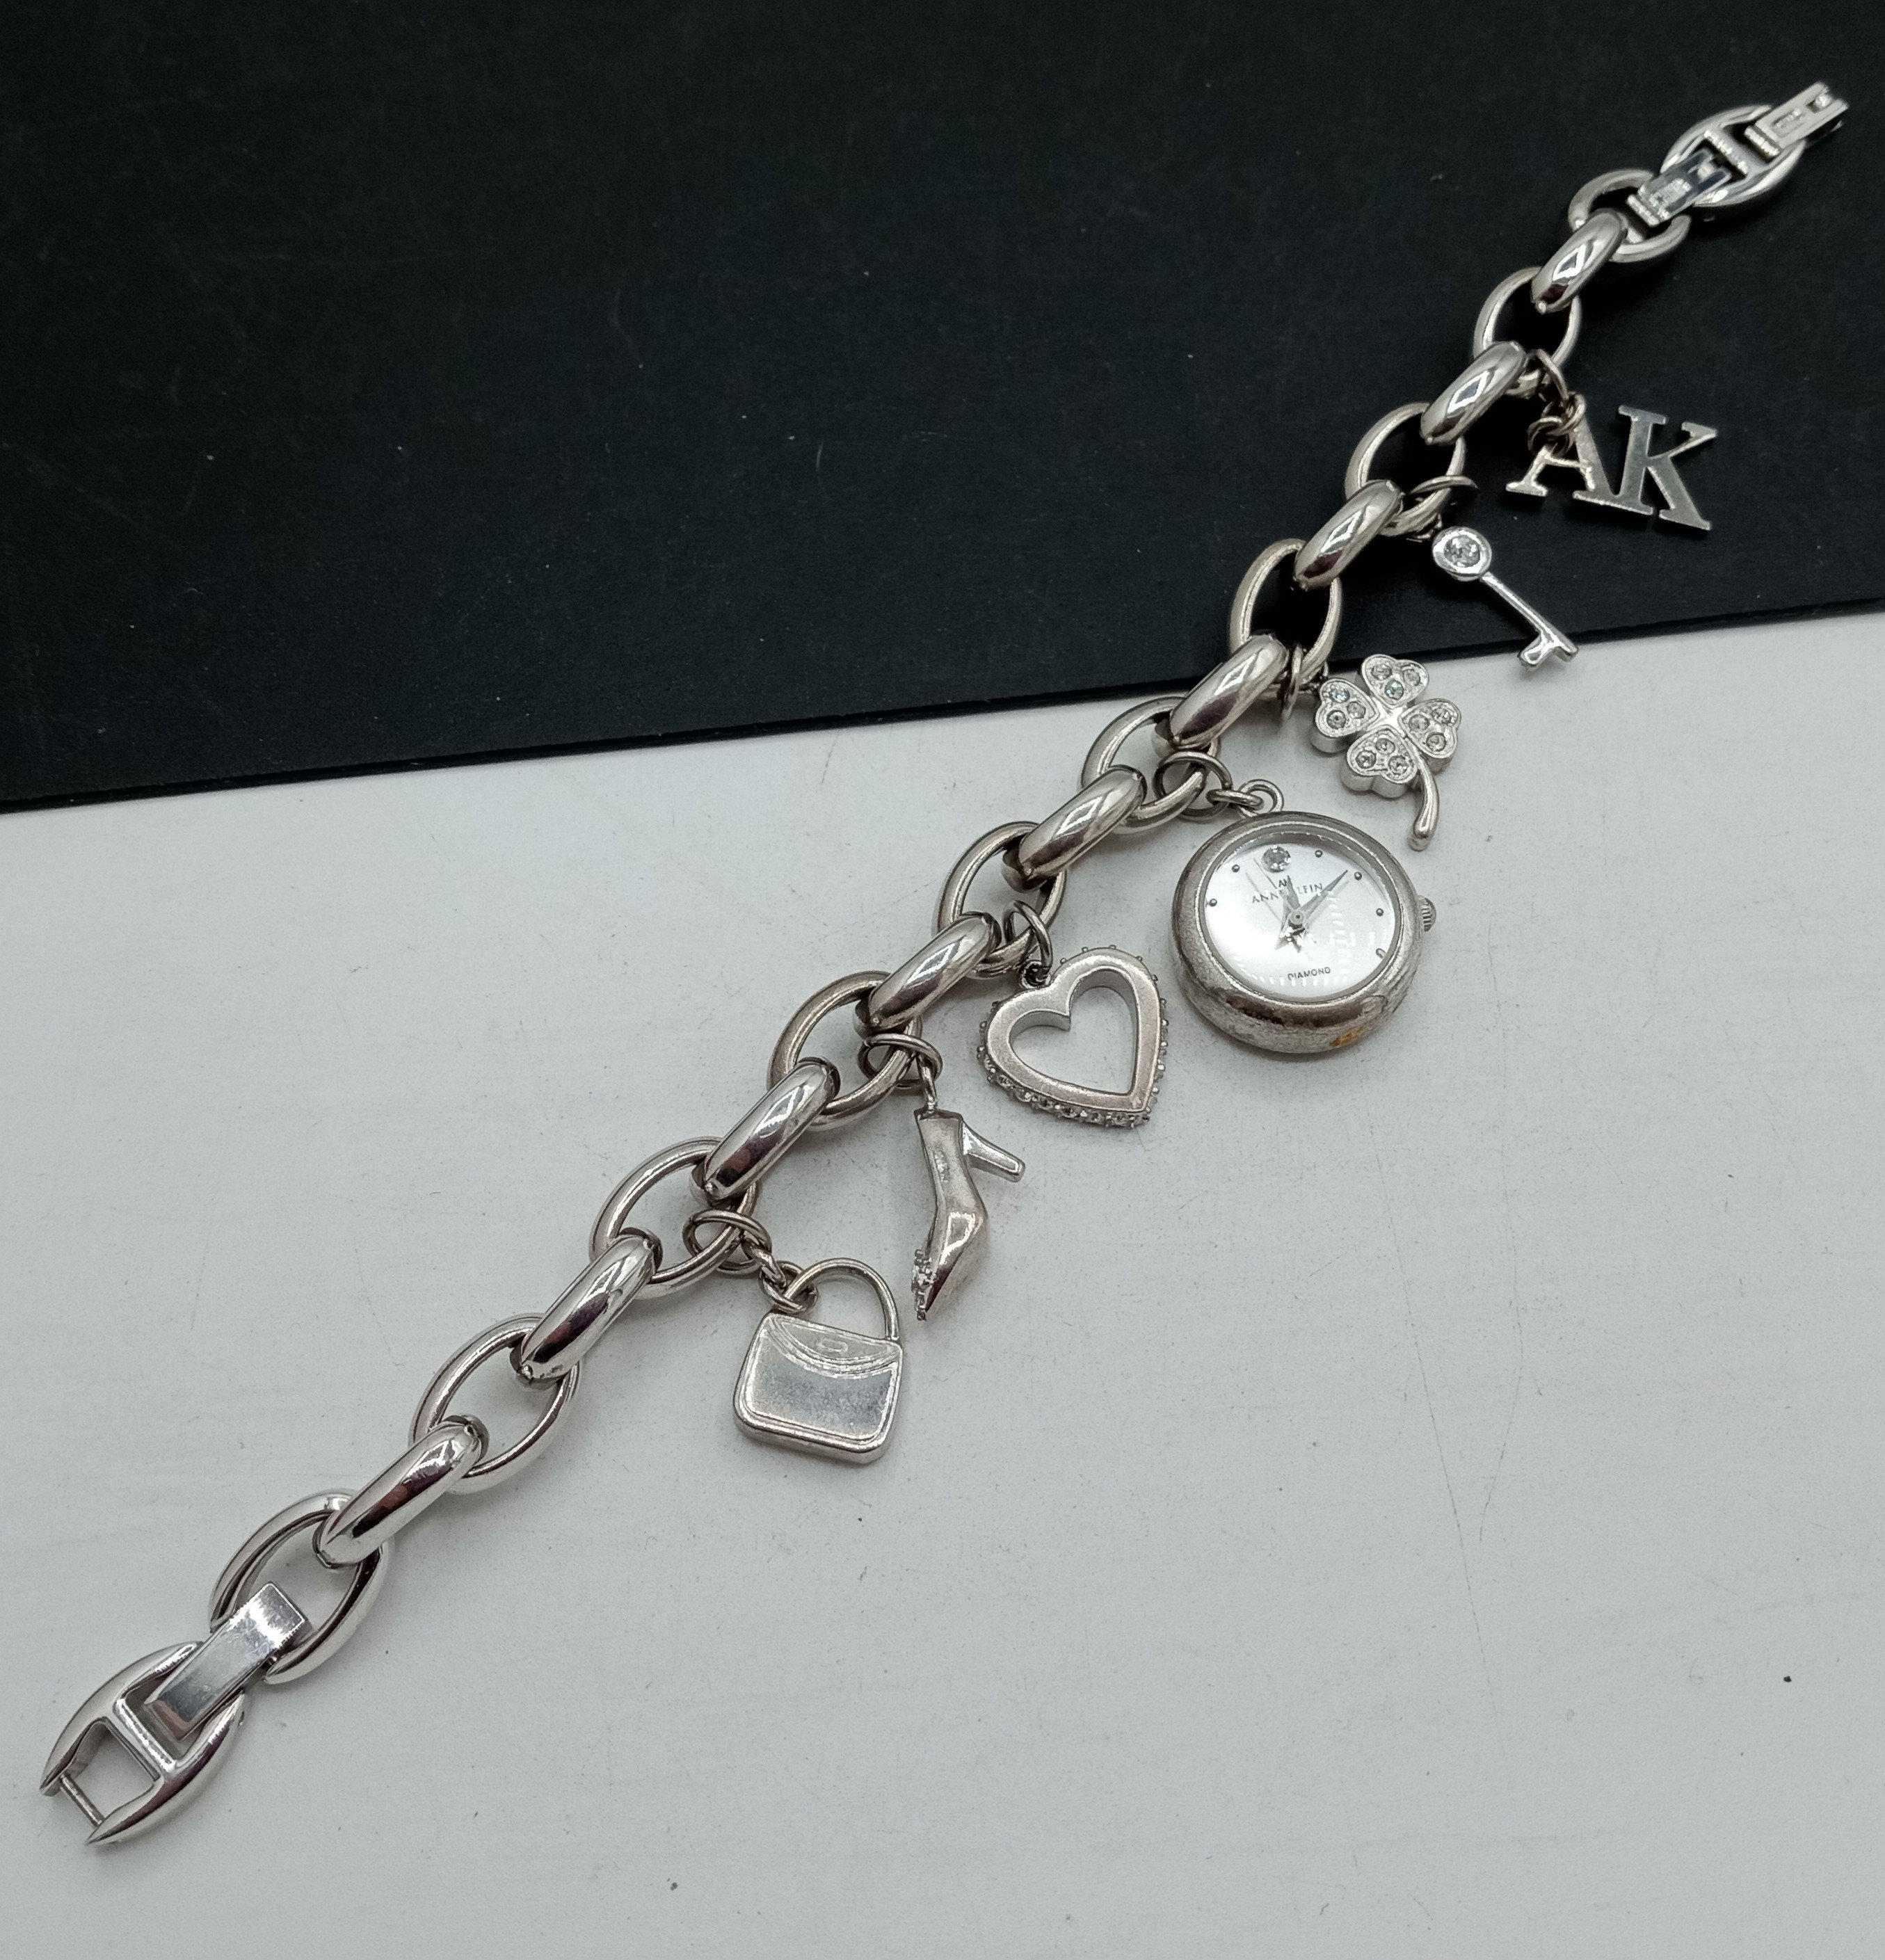 Vivani Silvertone Charm Bracelet Heart Watch New battery works | eBay